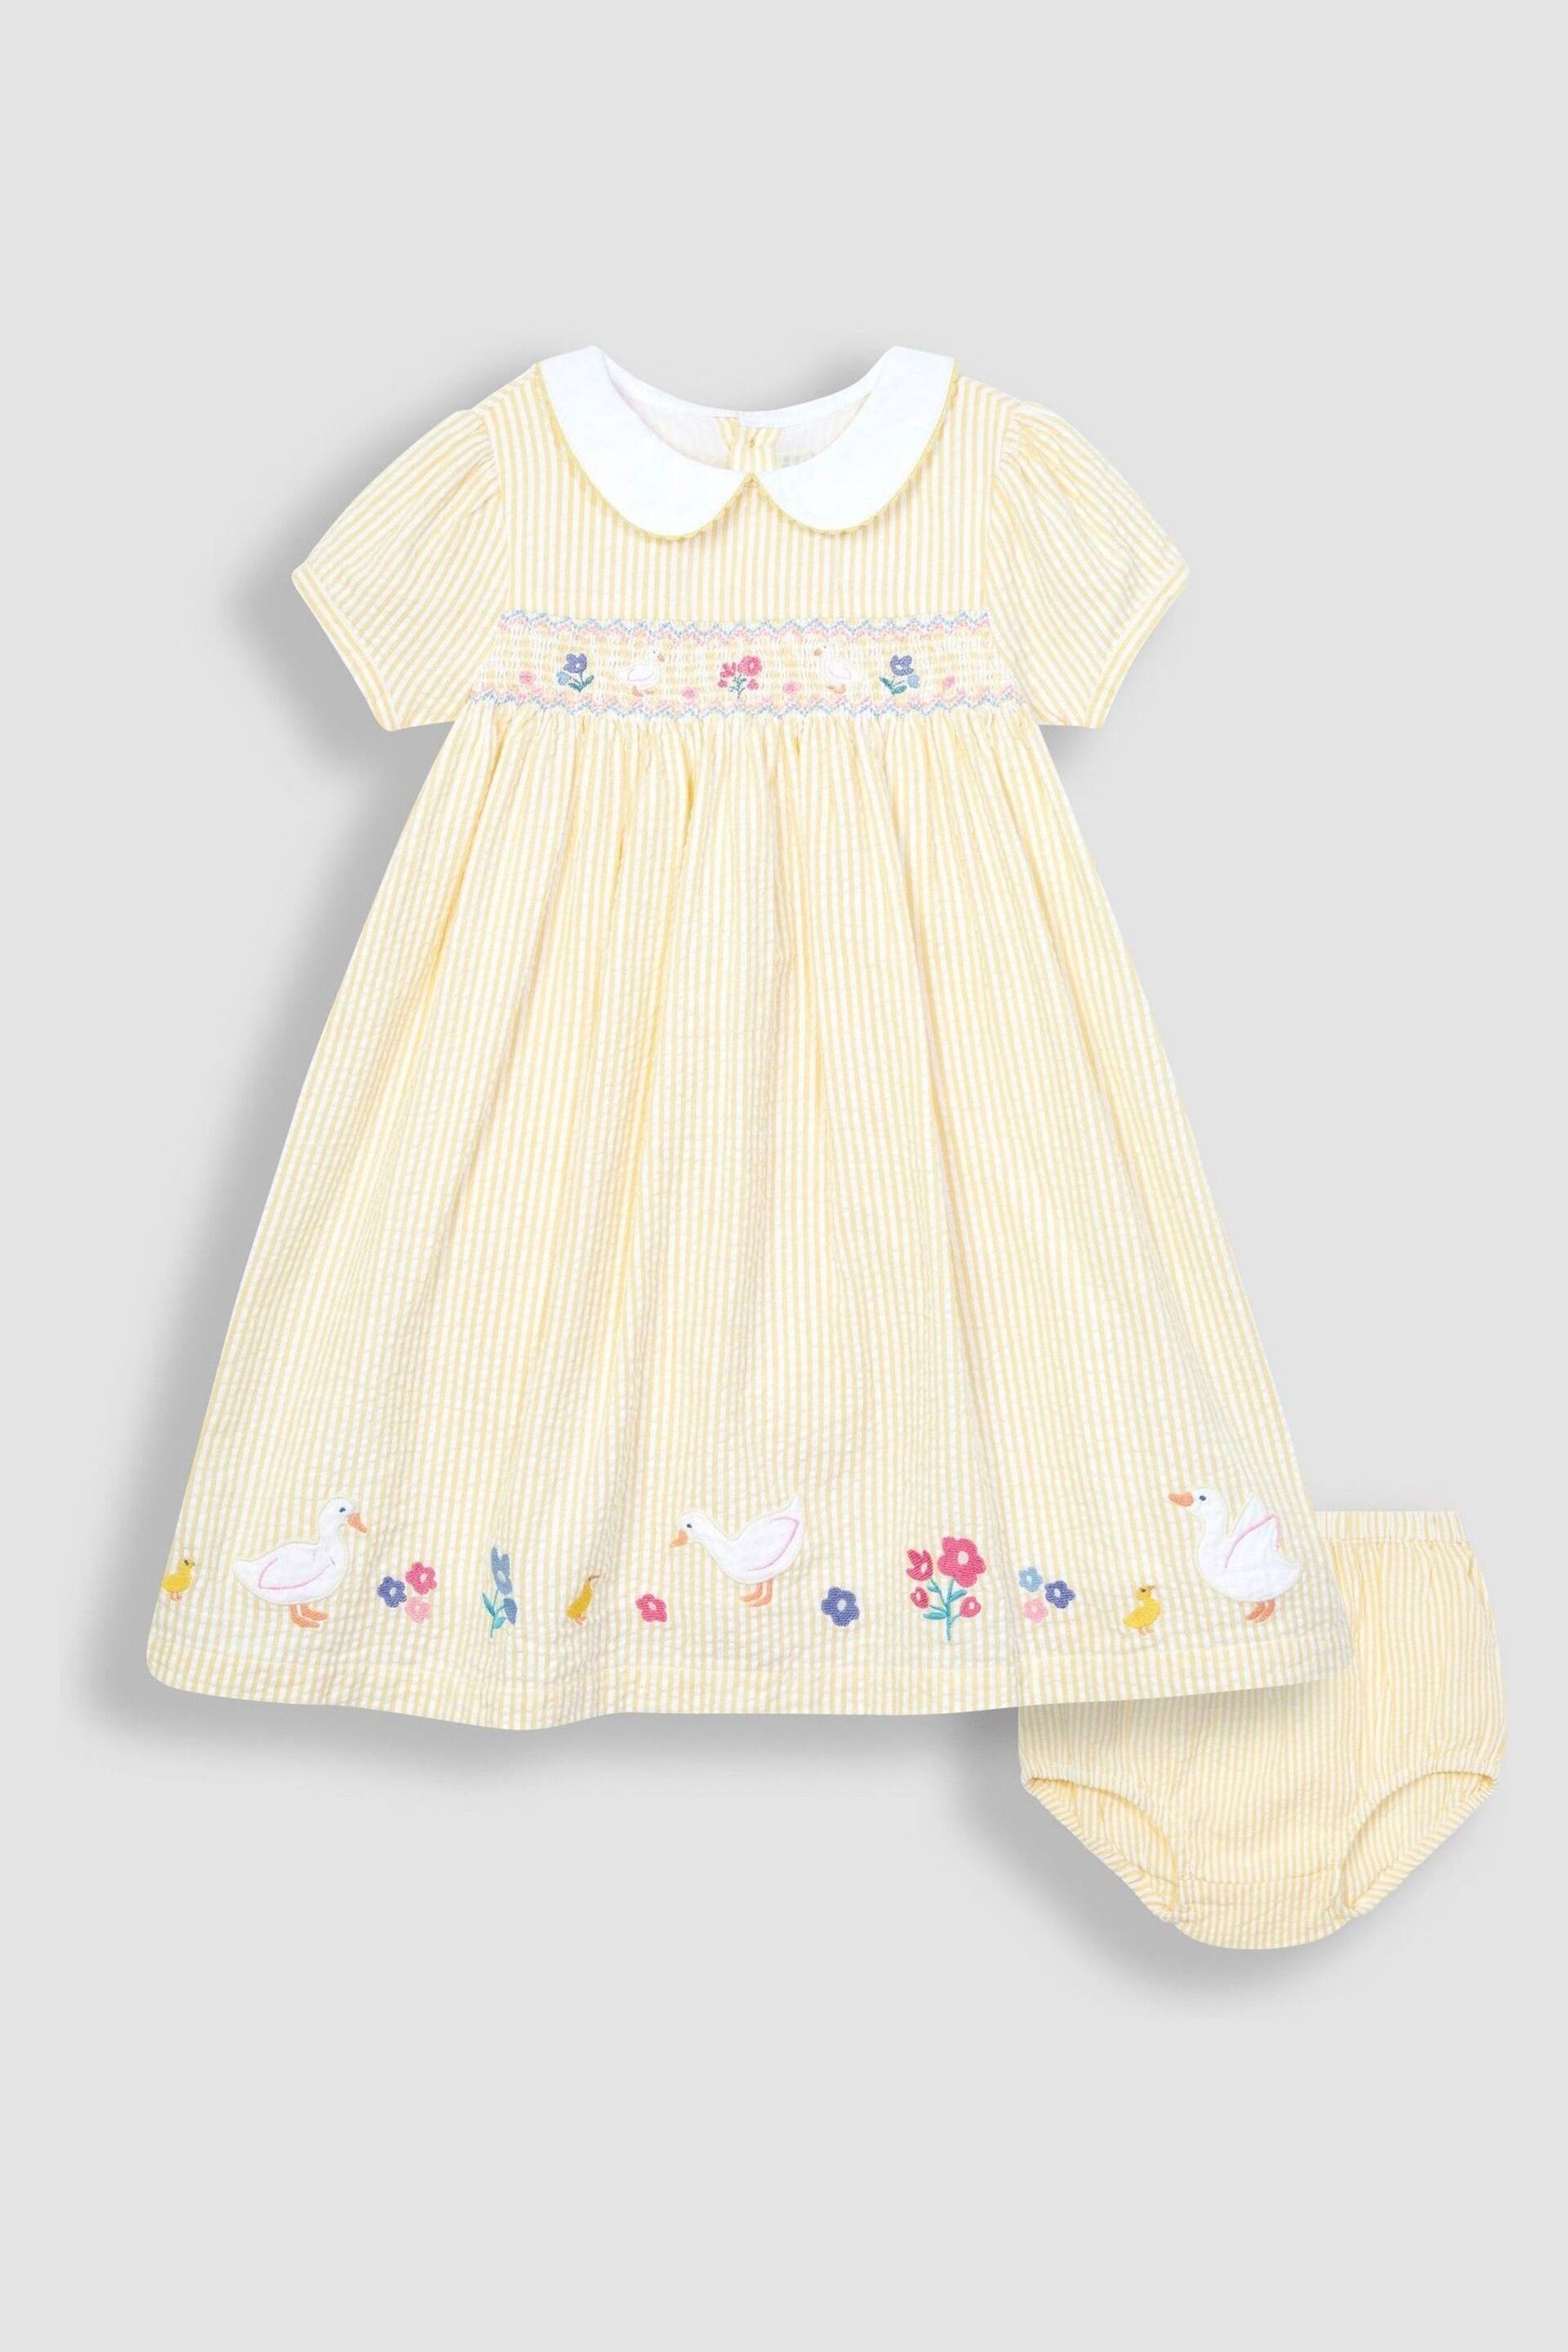 JoJo Maman Bébé Yellow Duck Embroidered Smocked Dress - Image 5 of 7